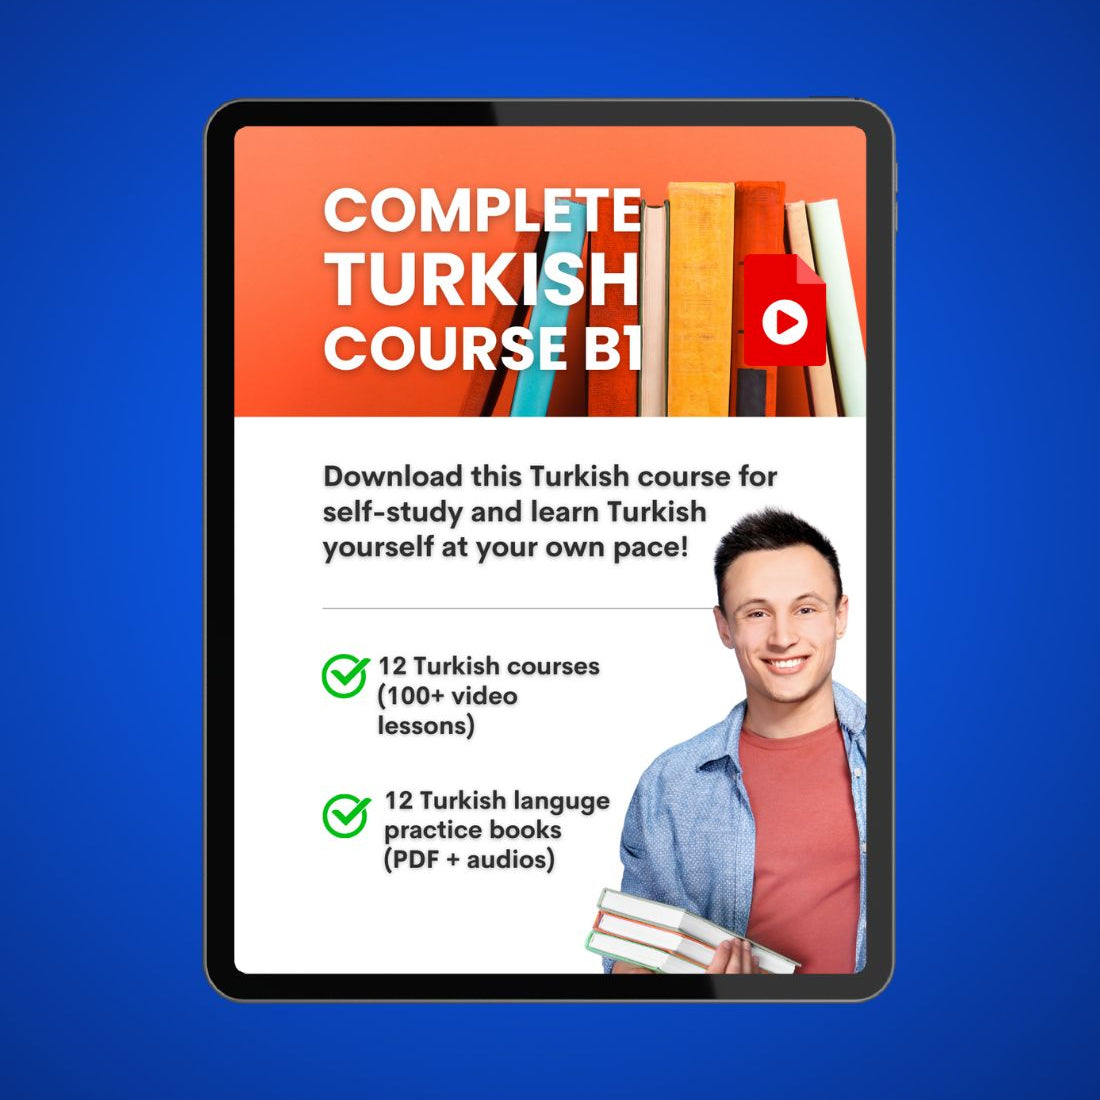 turkish courses b1 videos